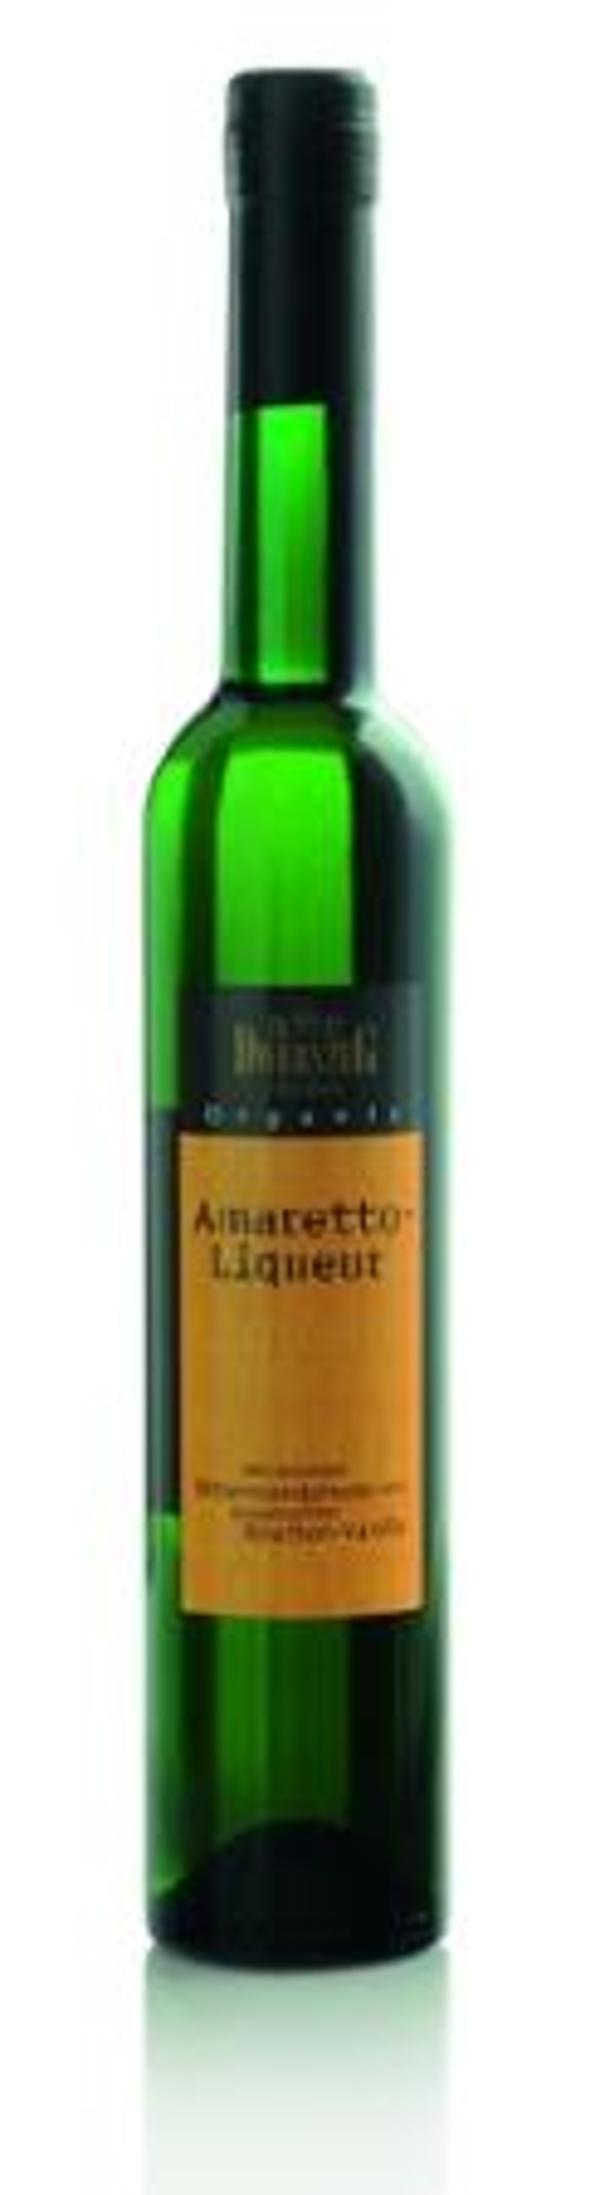 Produktfoto zu Amaretto-Liqueur, 0,5 l